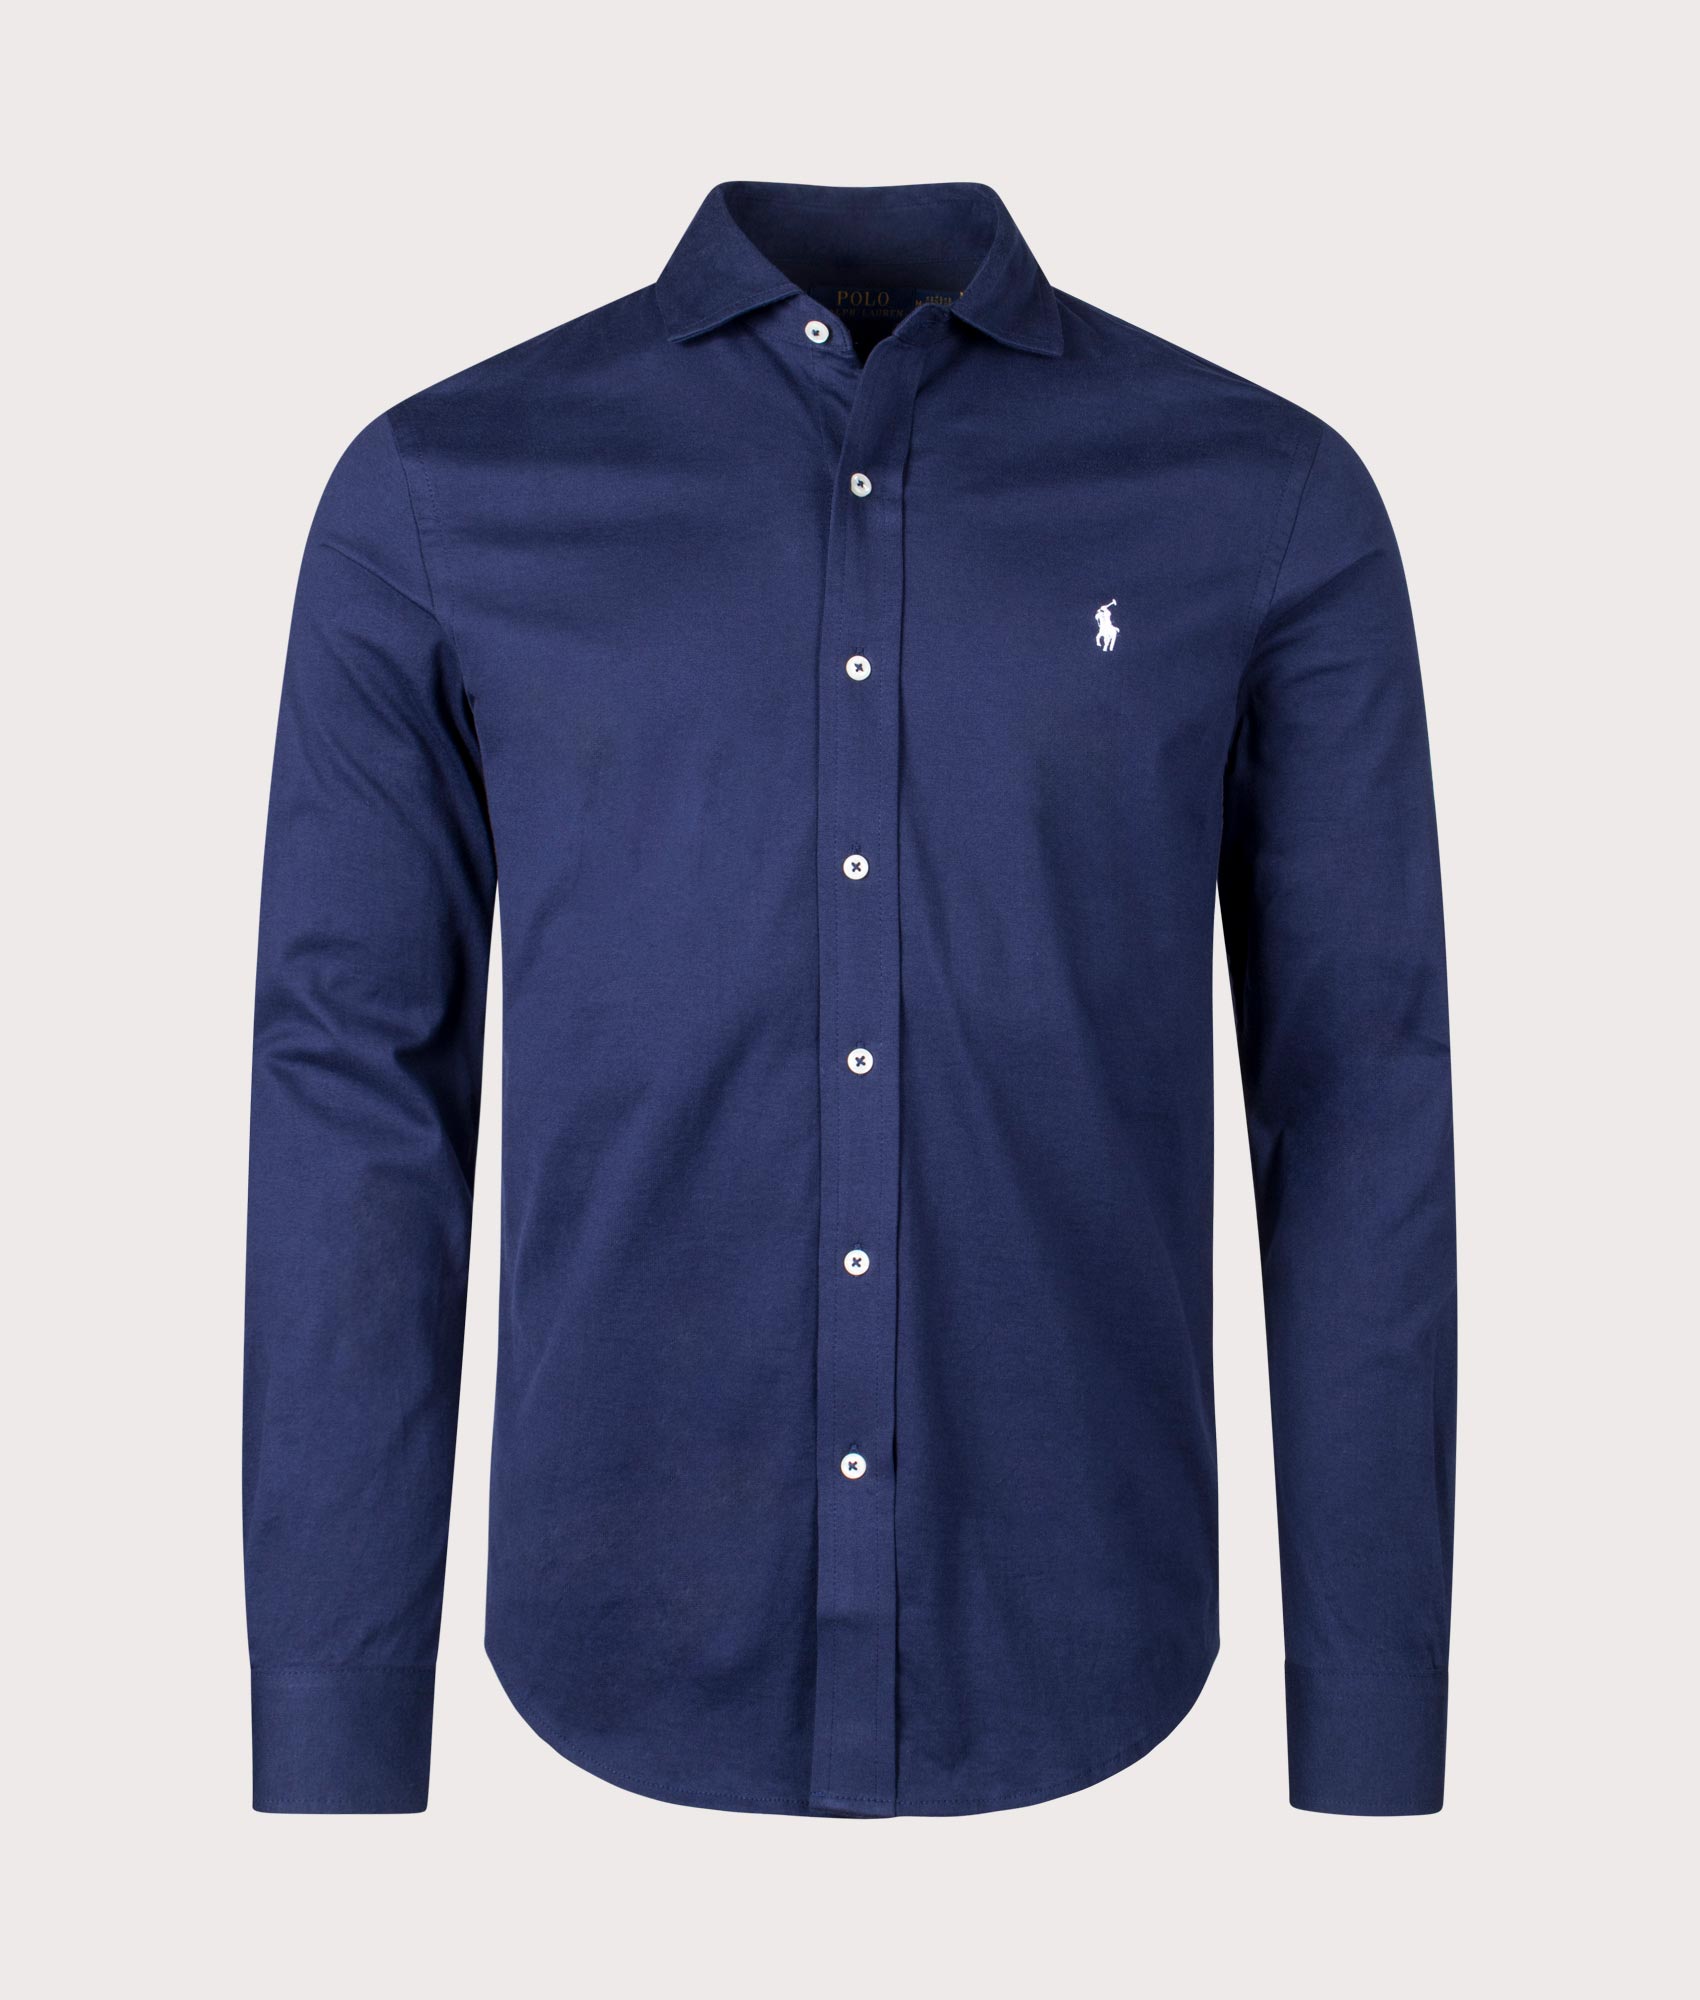 Polo Ralph Lauren Mens Jersey Shirt - Colour: 003 Cruise Navy - Size: Small